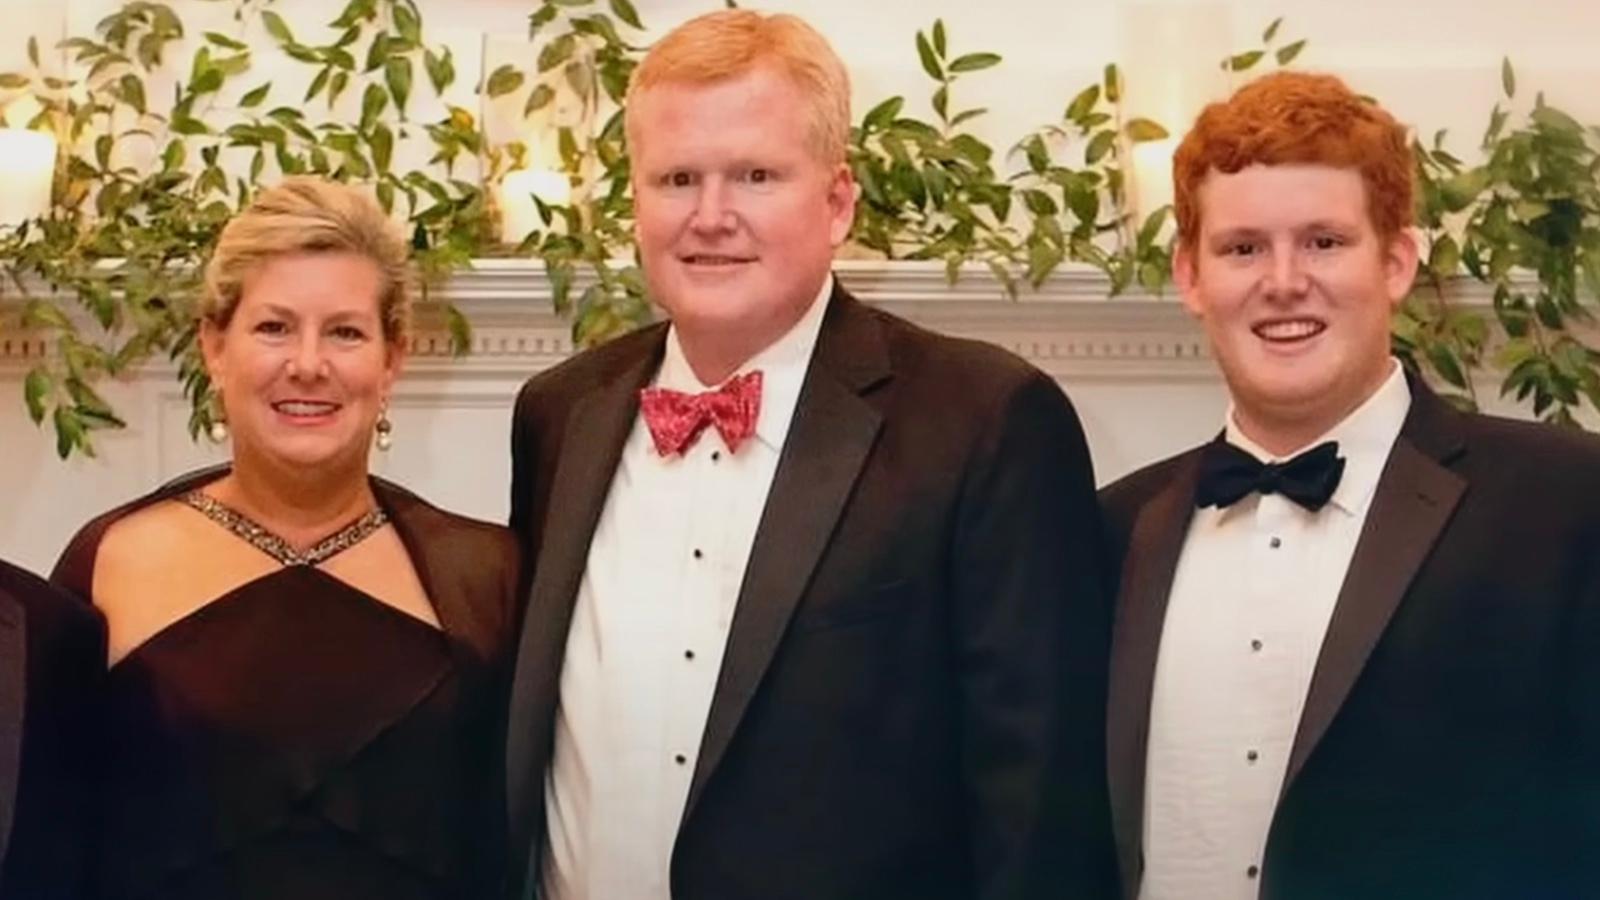 Family photo of Murdaugh family in Netflix documentary series